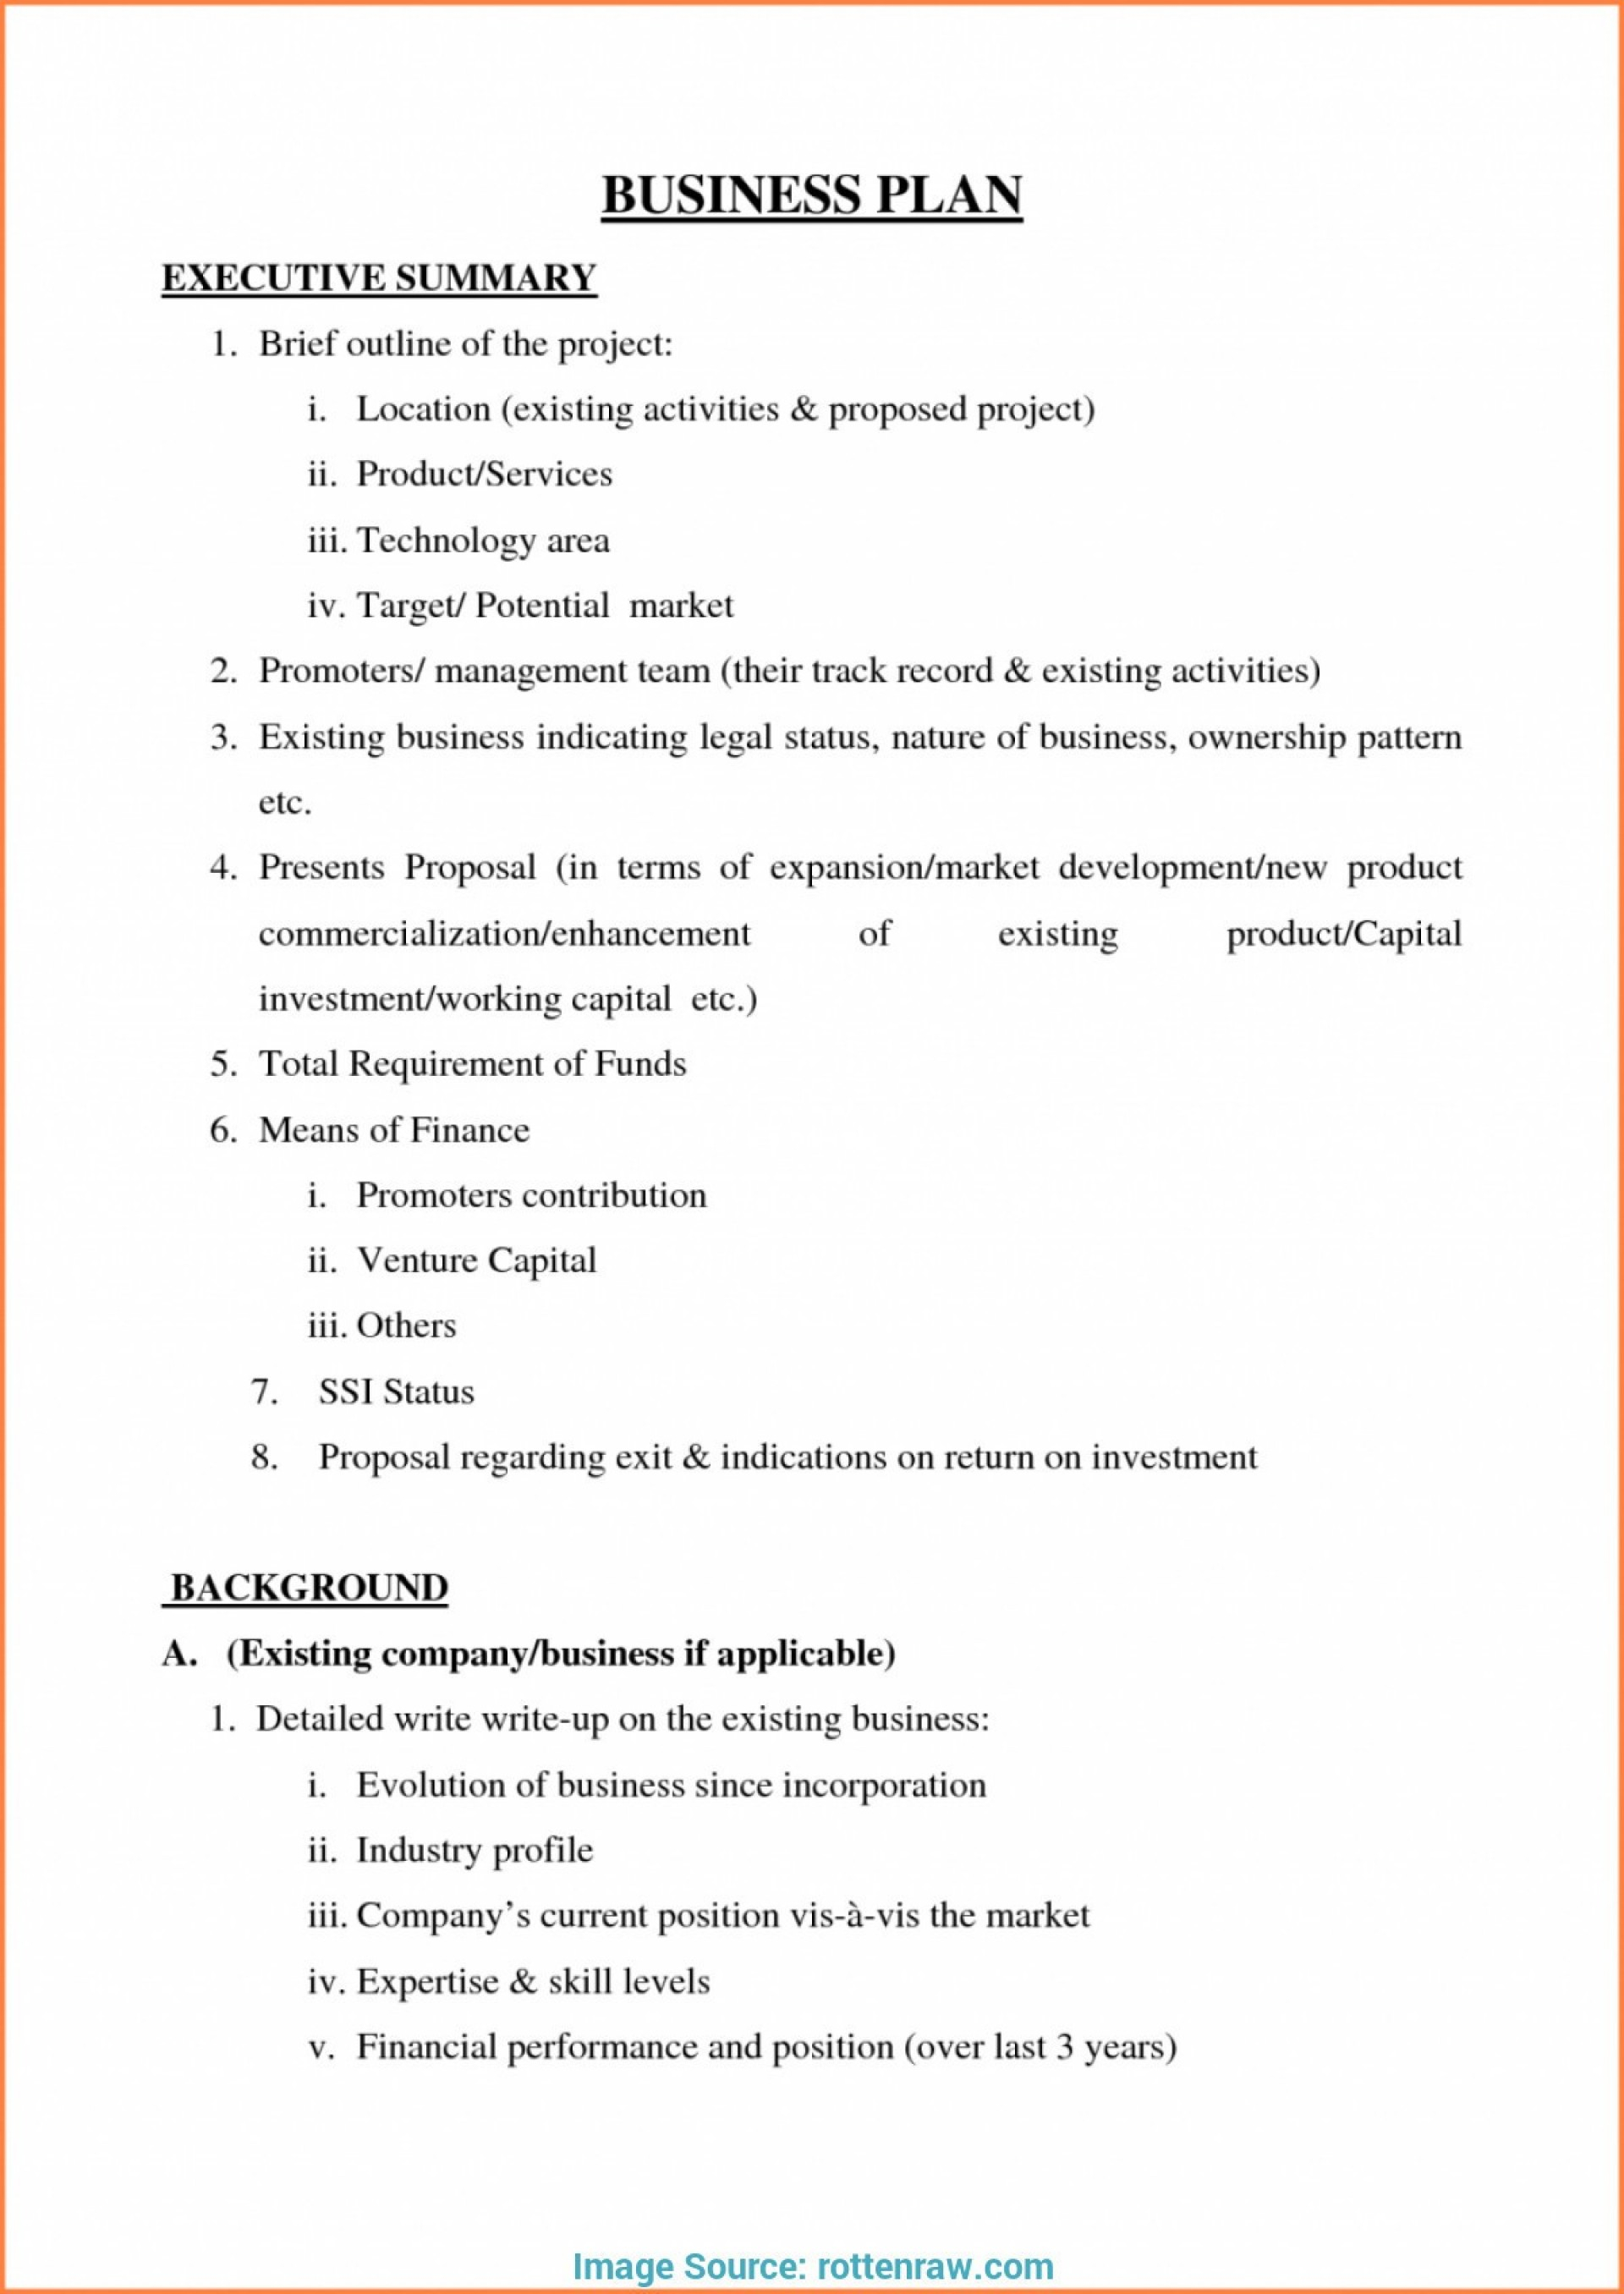 business plan template free pdf download